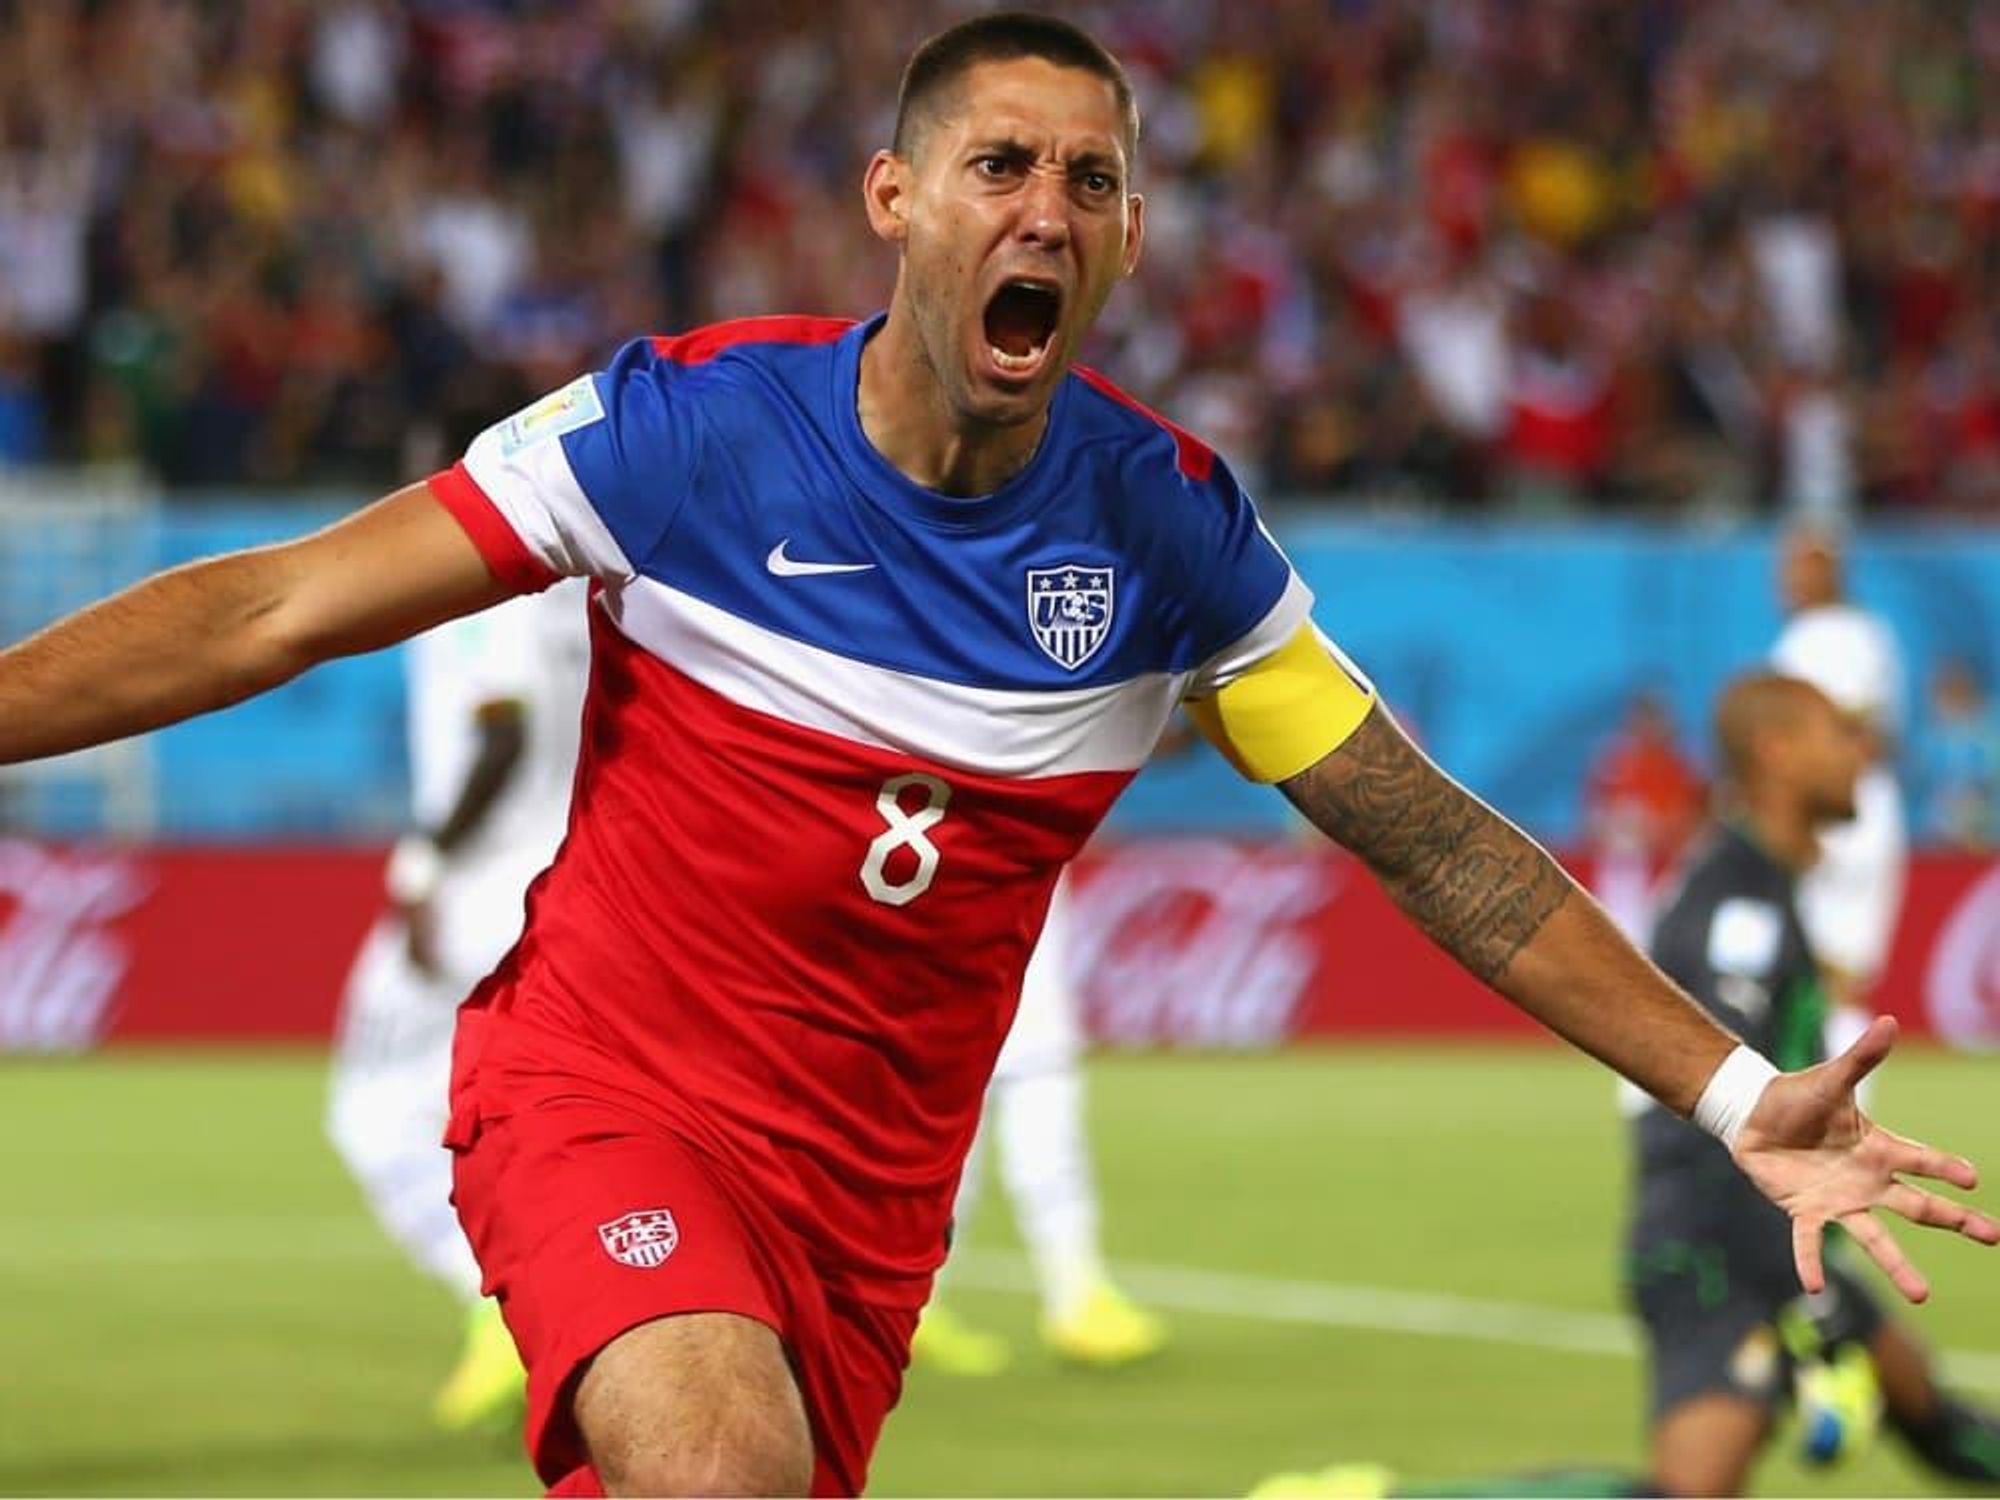 US men's national soccer team Clint Dempsey celebrating goal against Ghana in World Cup 2014